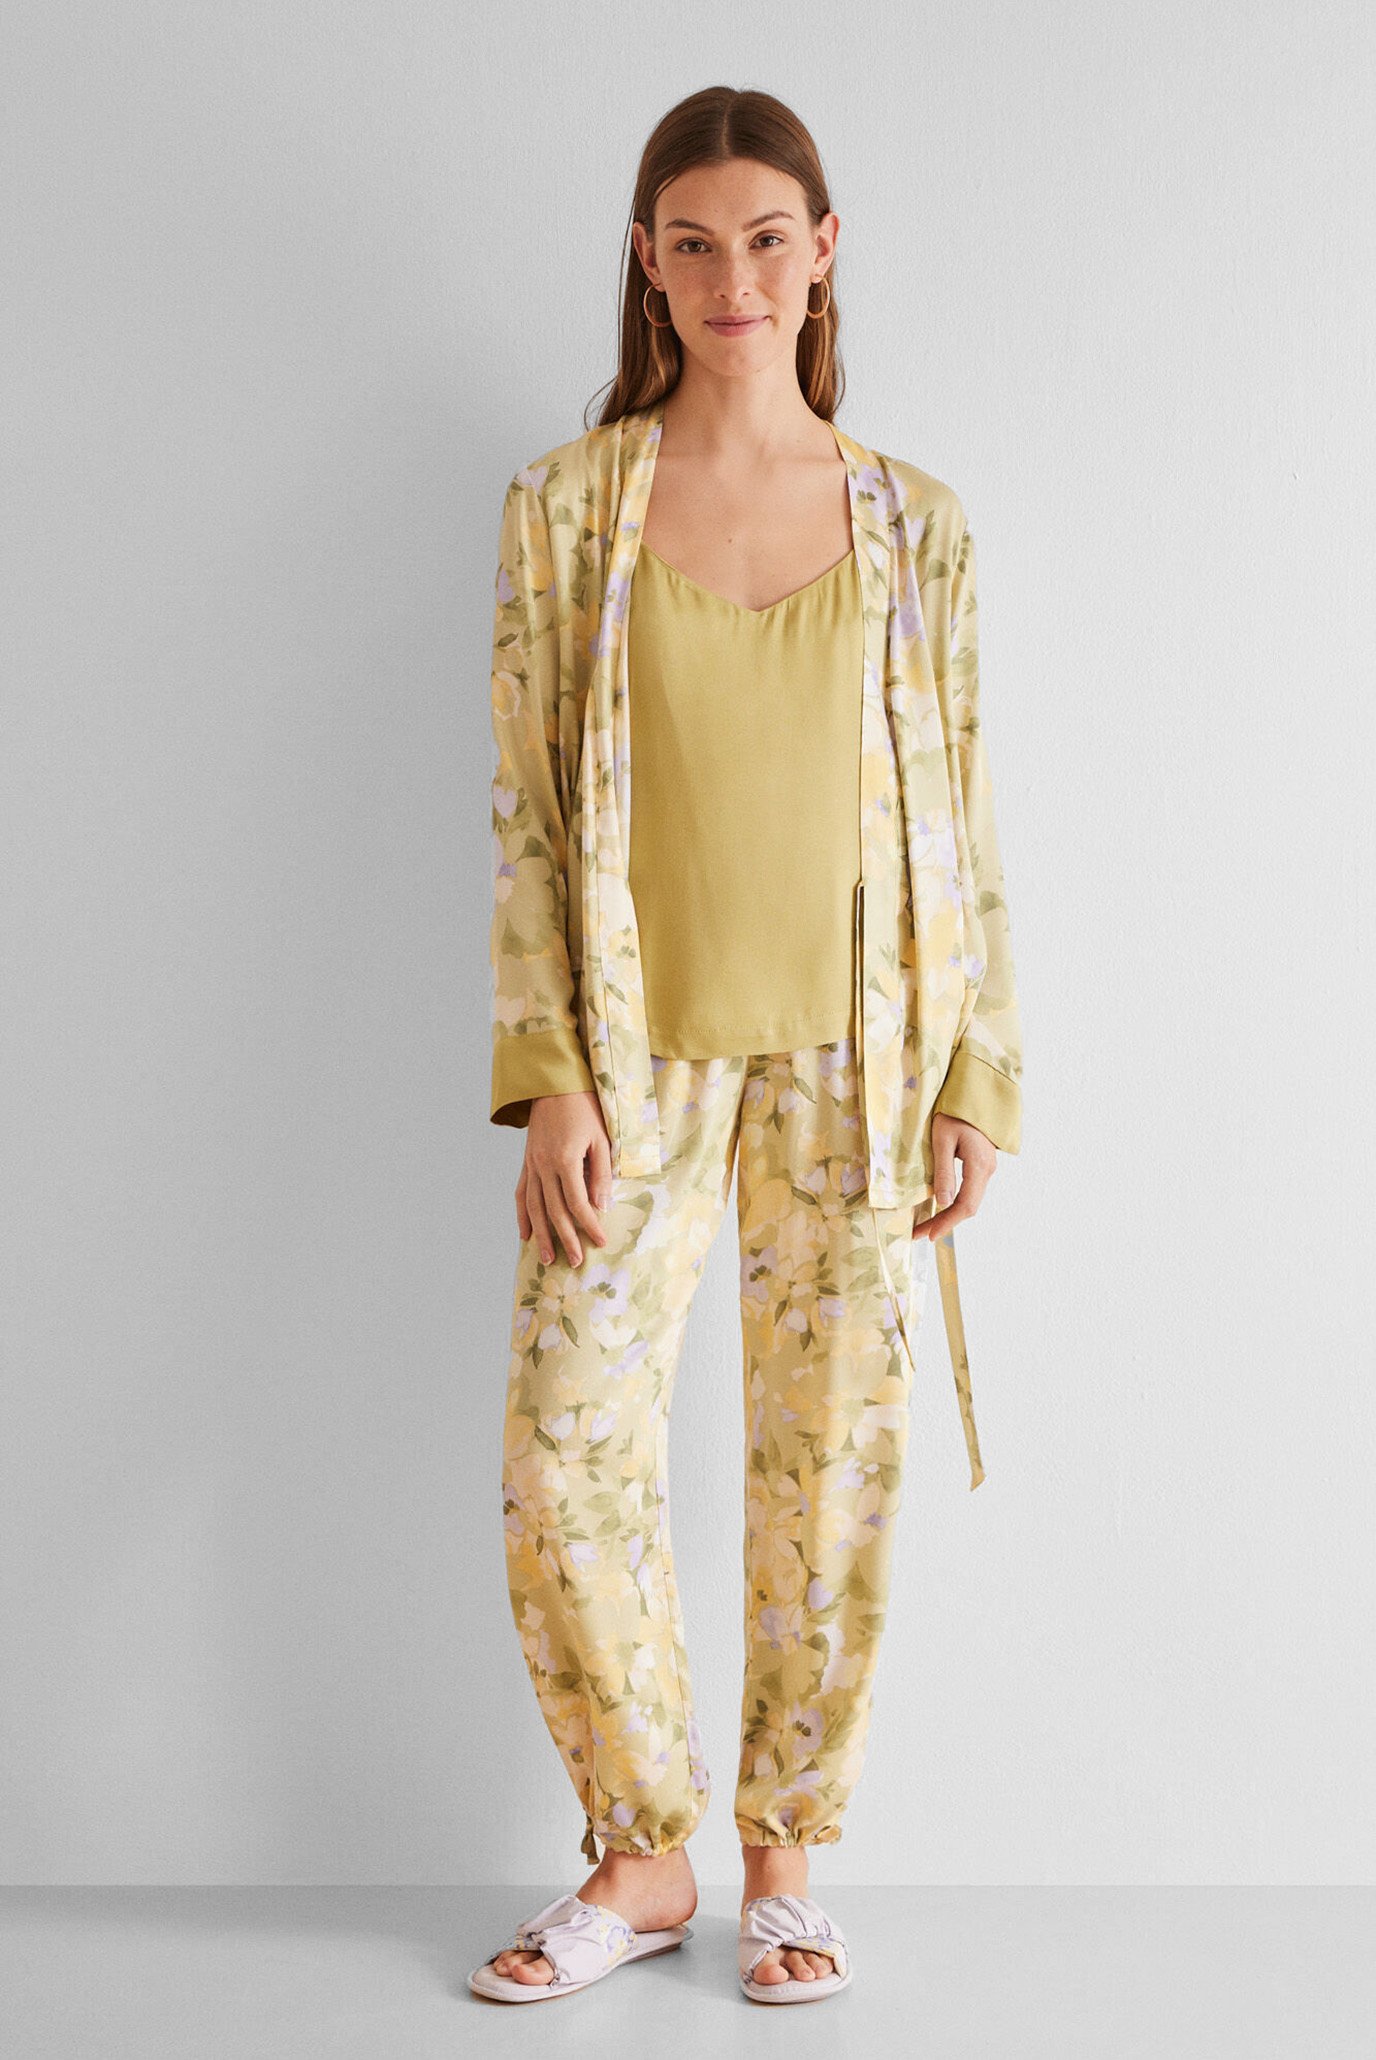 Женская салатовая пижама с узором (топ, кардиган, брюки) 1